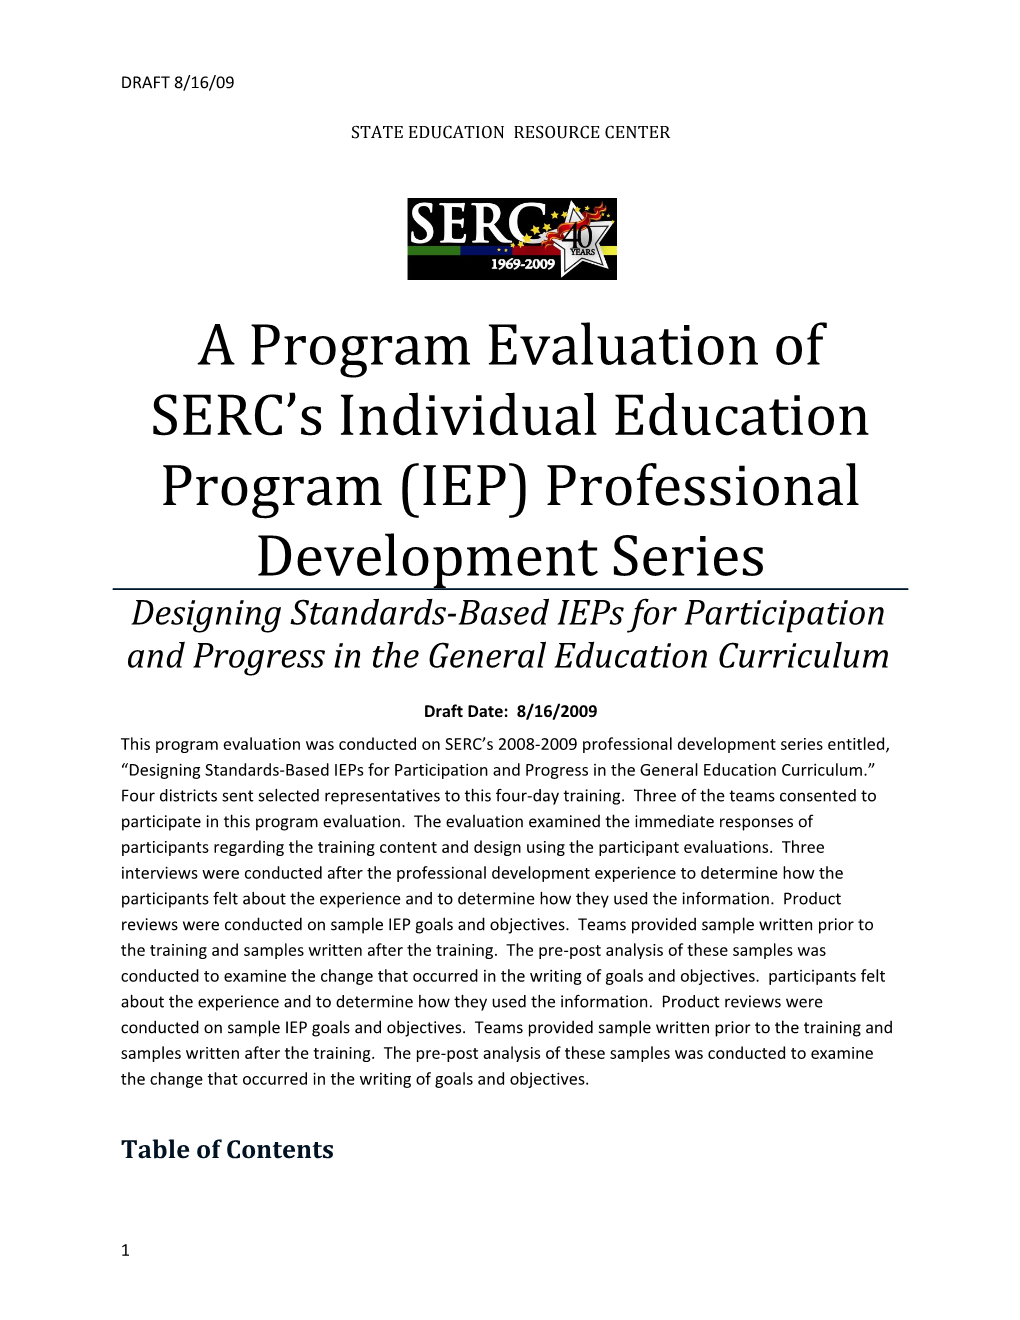 A Program Evaluation of SERC S IEP Professional Development Series